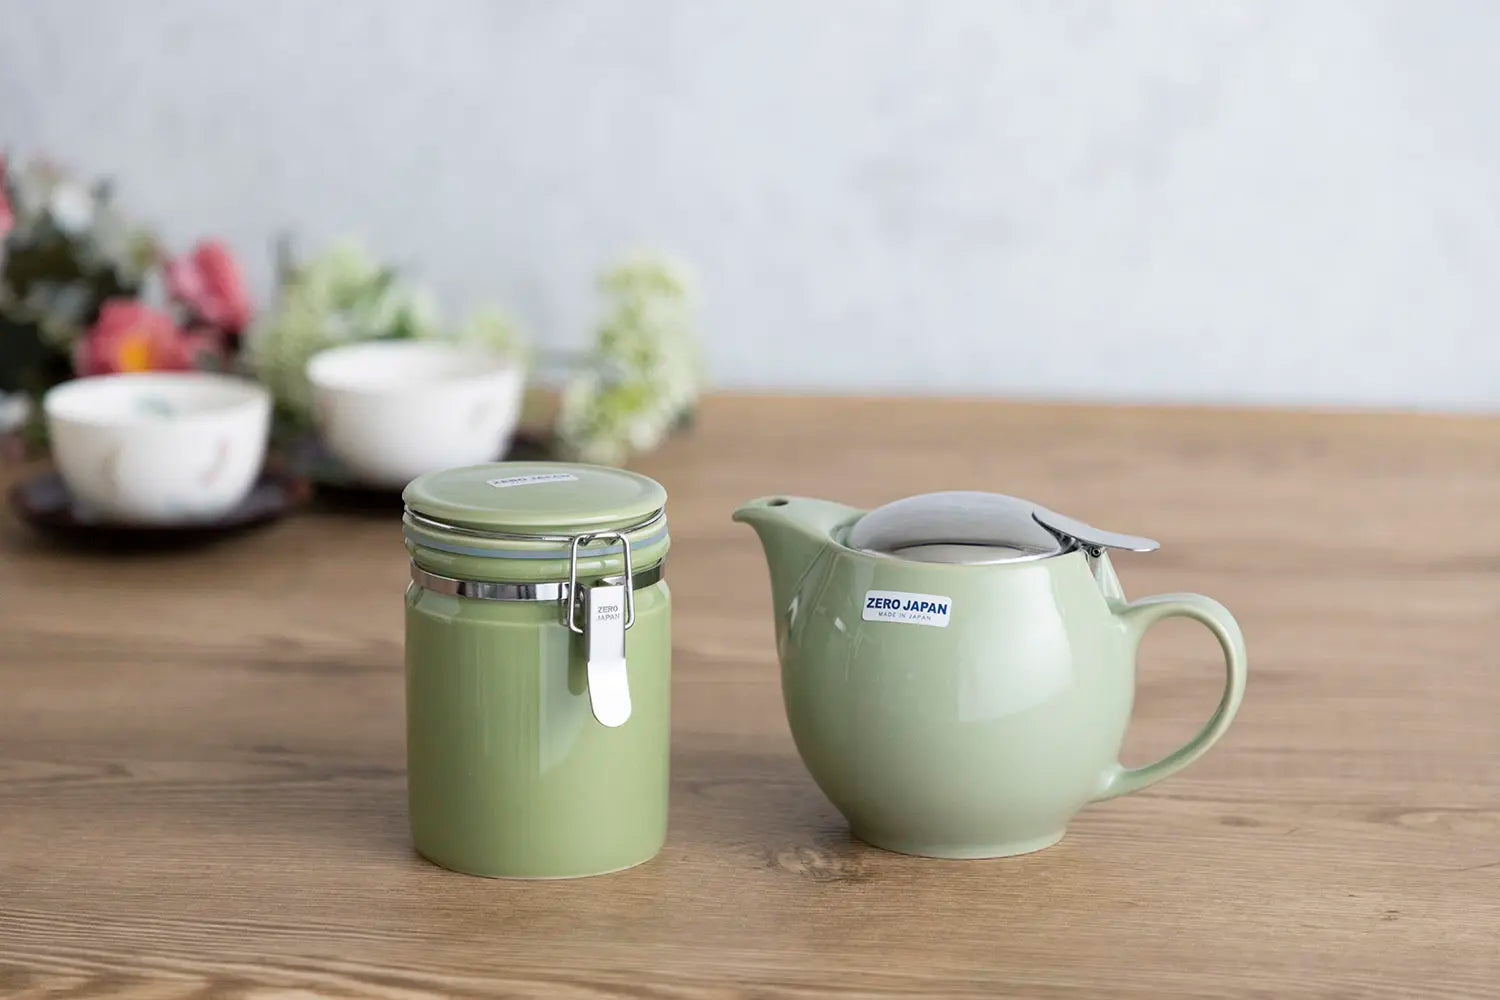 ZERO JAPAN Mino Ware Ceramic Tea Canister and Teapot